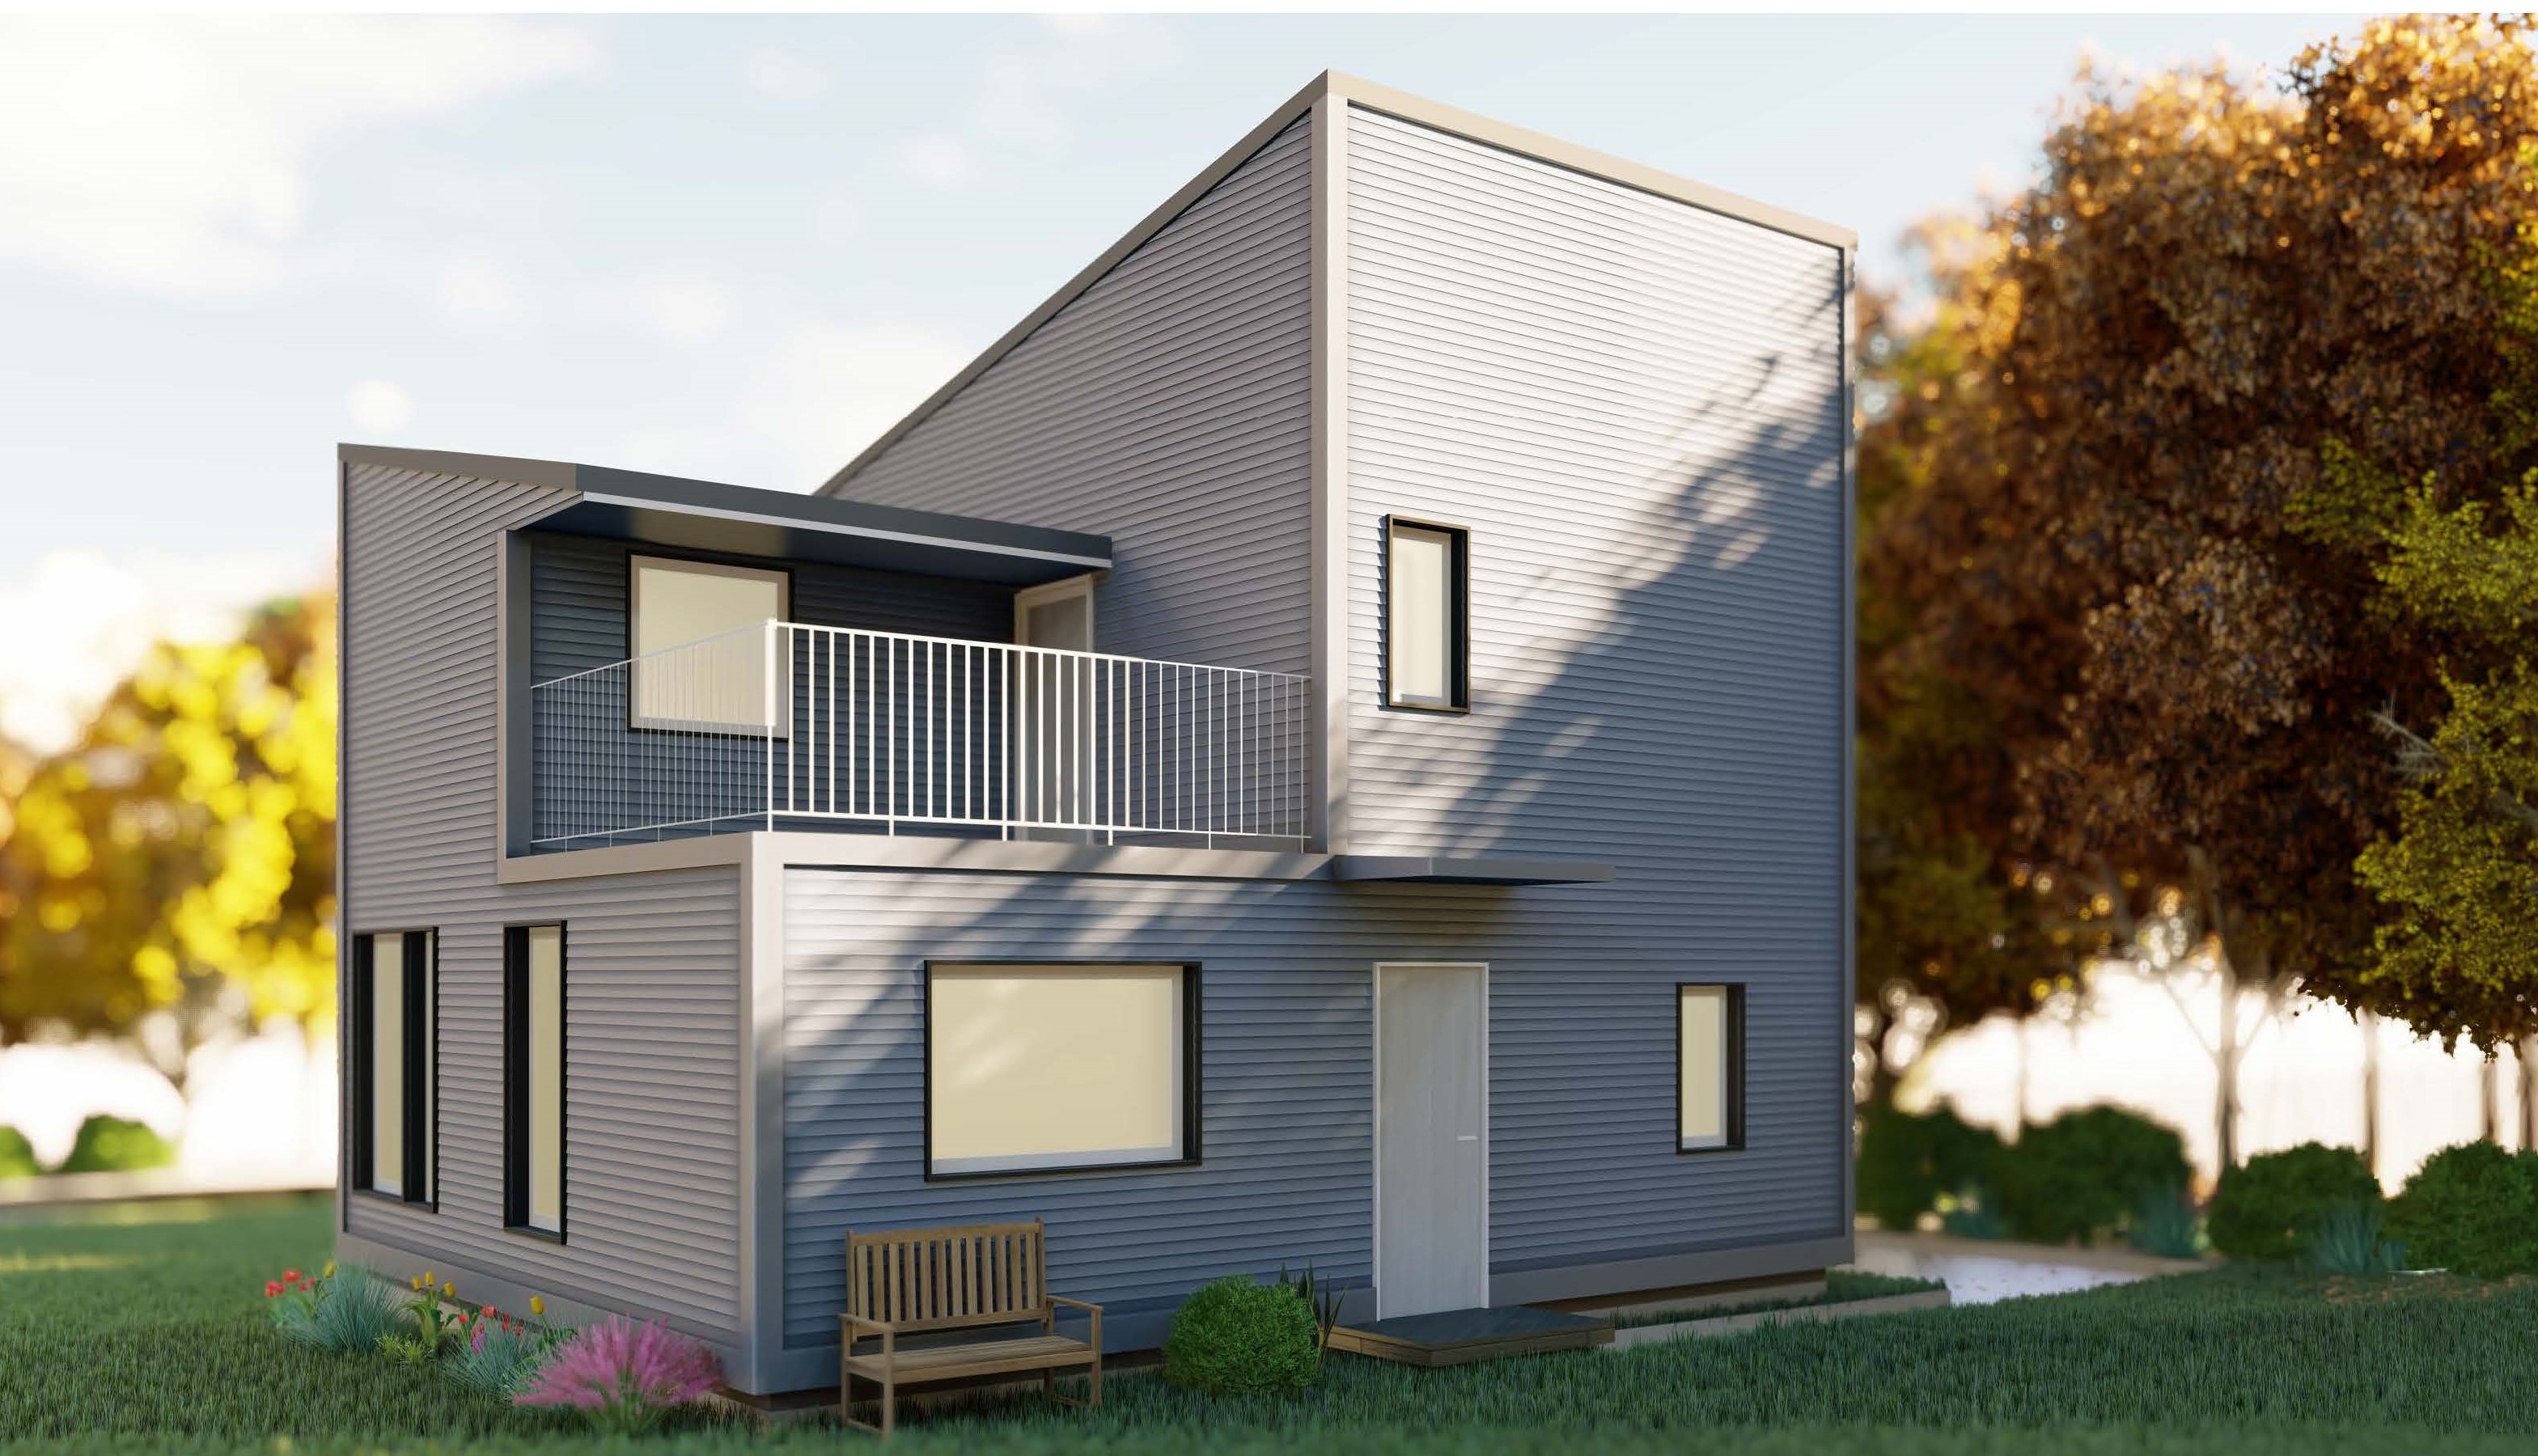 Rhode Island development pairs affordable housing with net-zero design